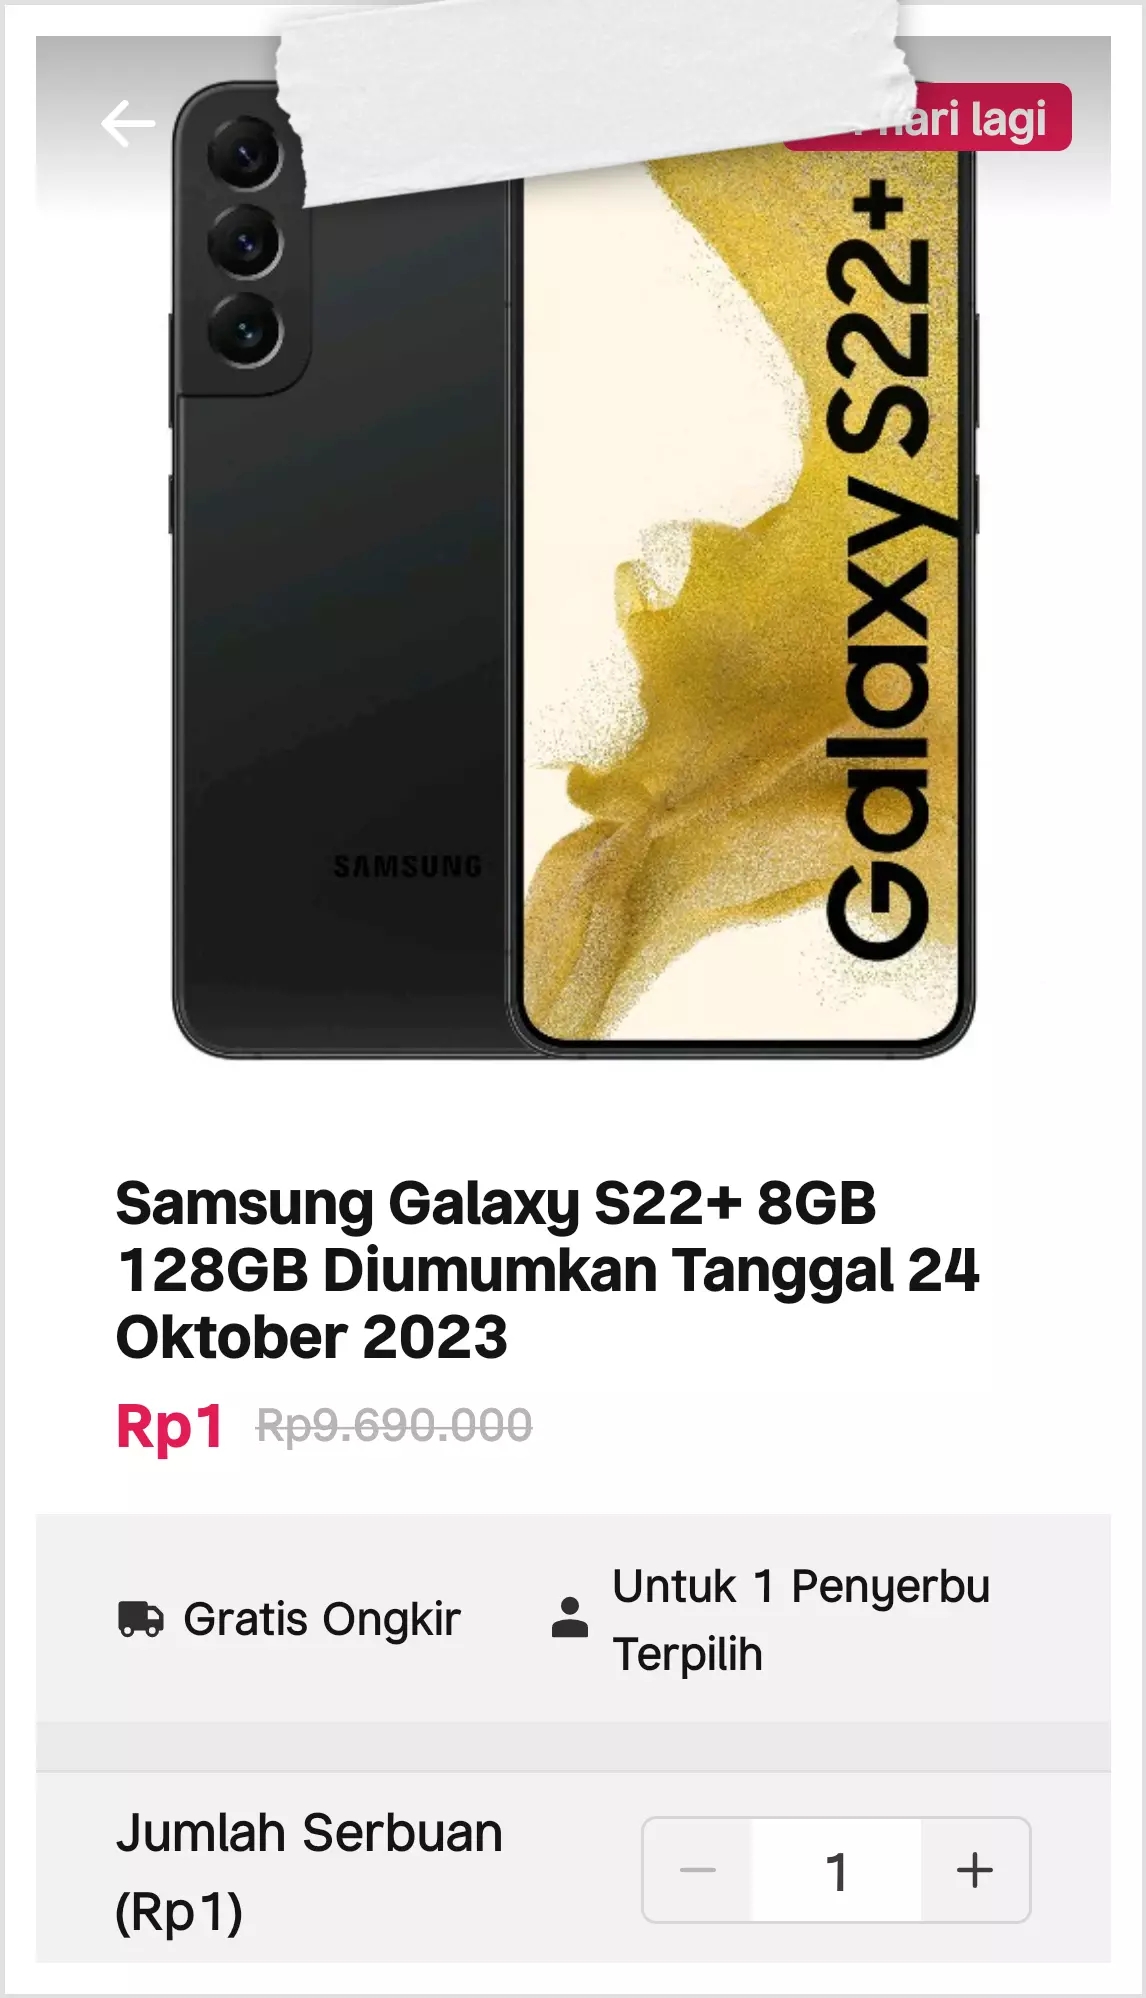 Samsung Galaxy S22 seharga satu rupiah, bukan bohong 